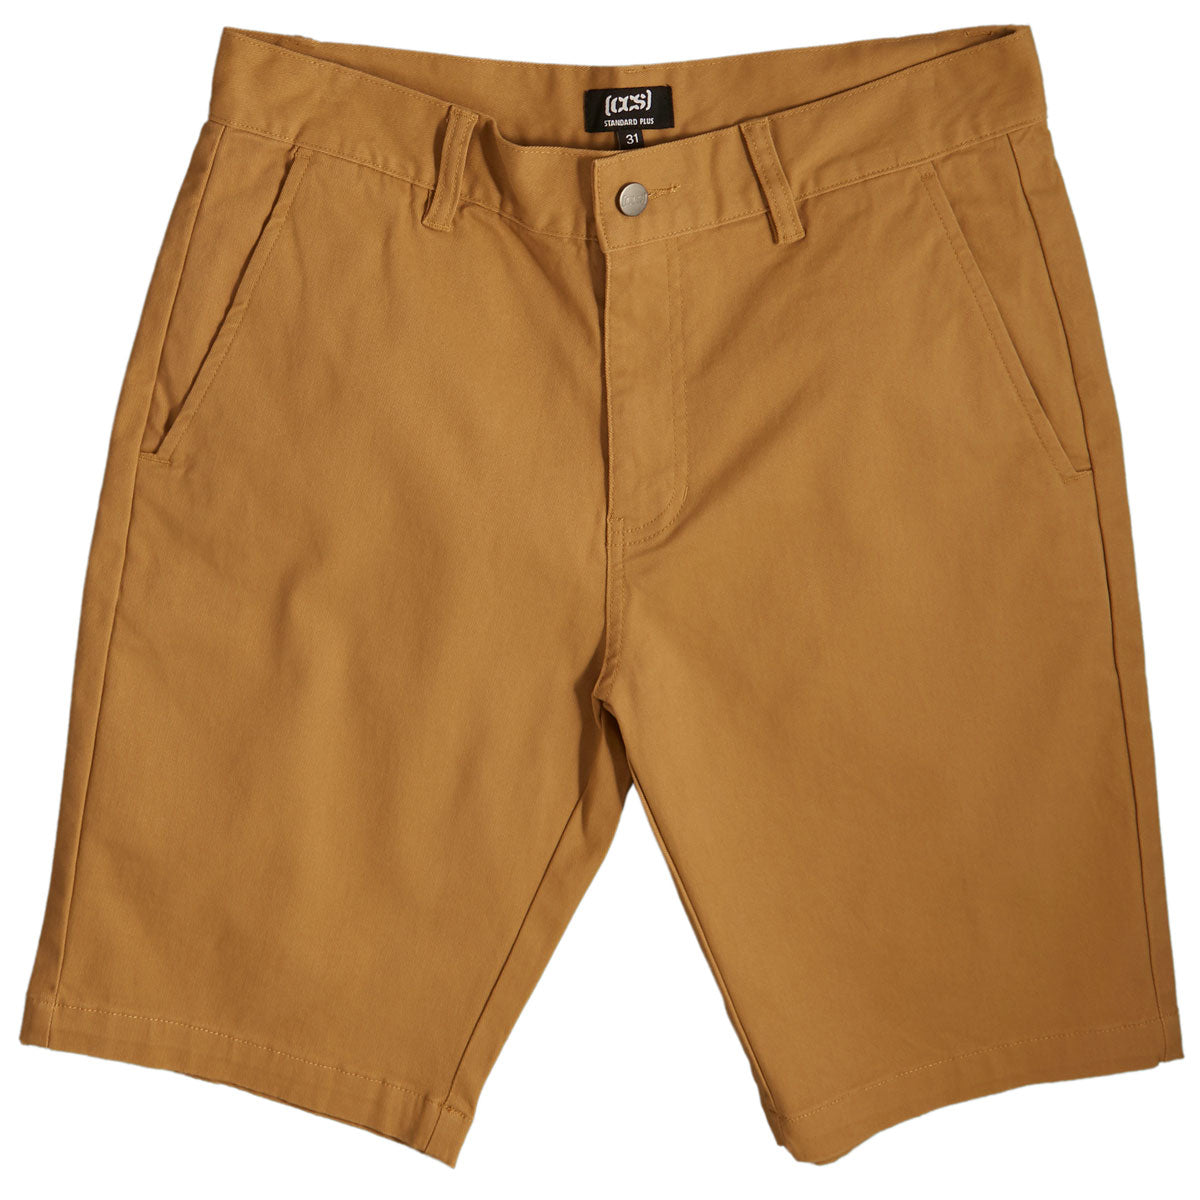 CCS Standard Plus Chino Shorts - Khaki image 5